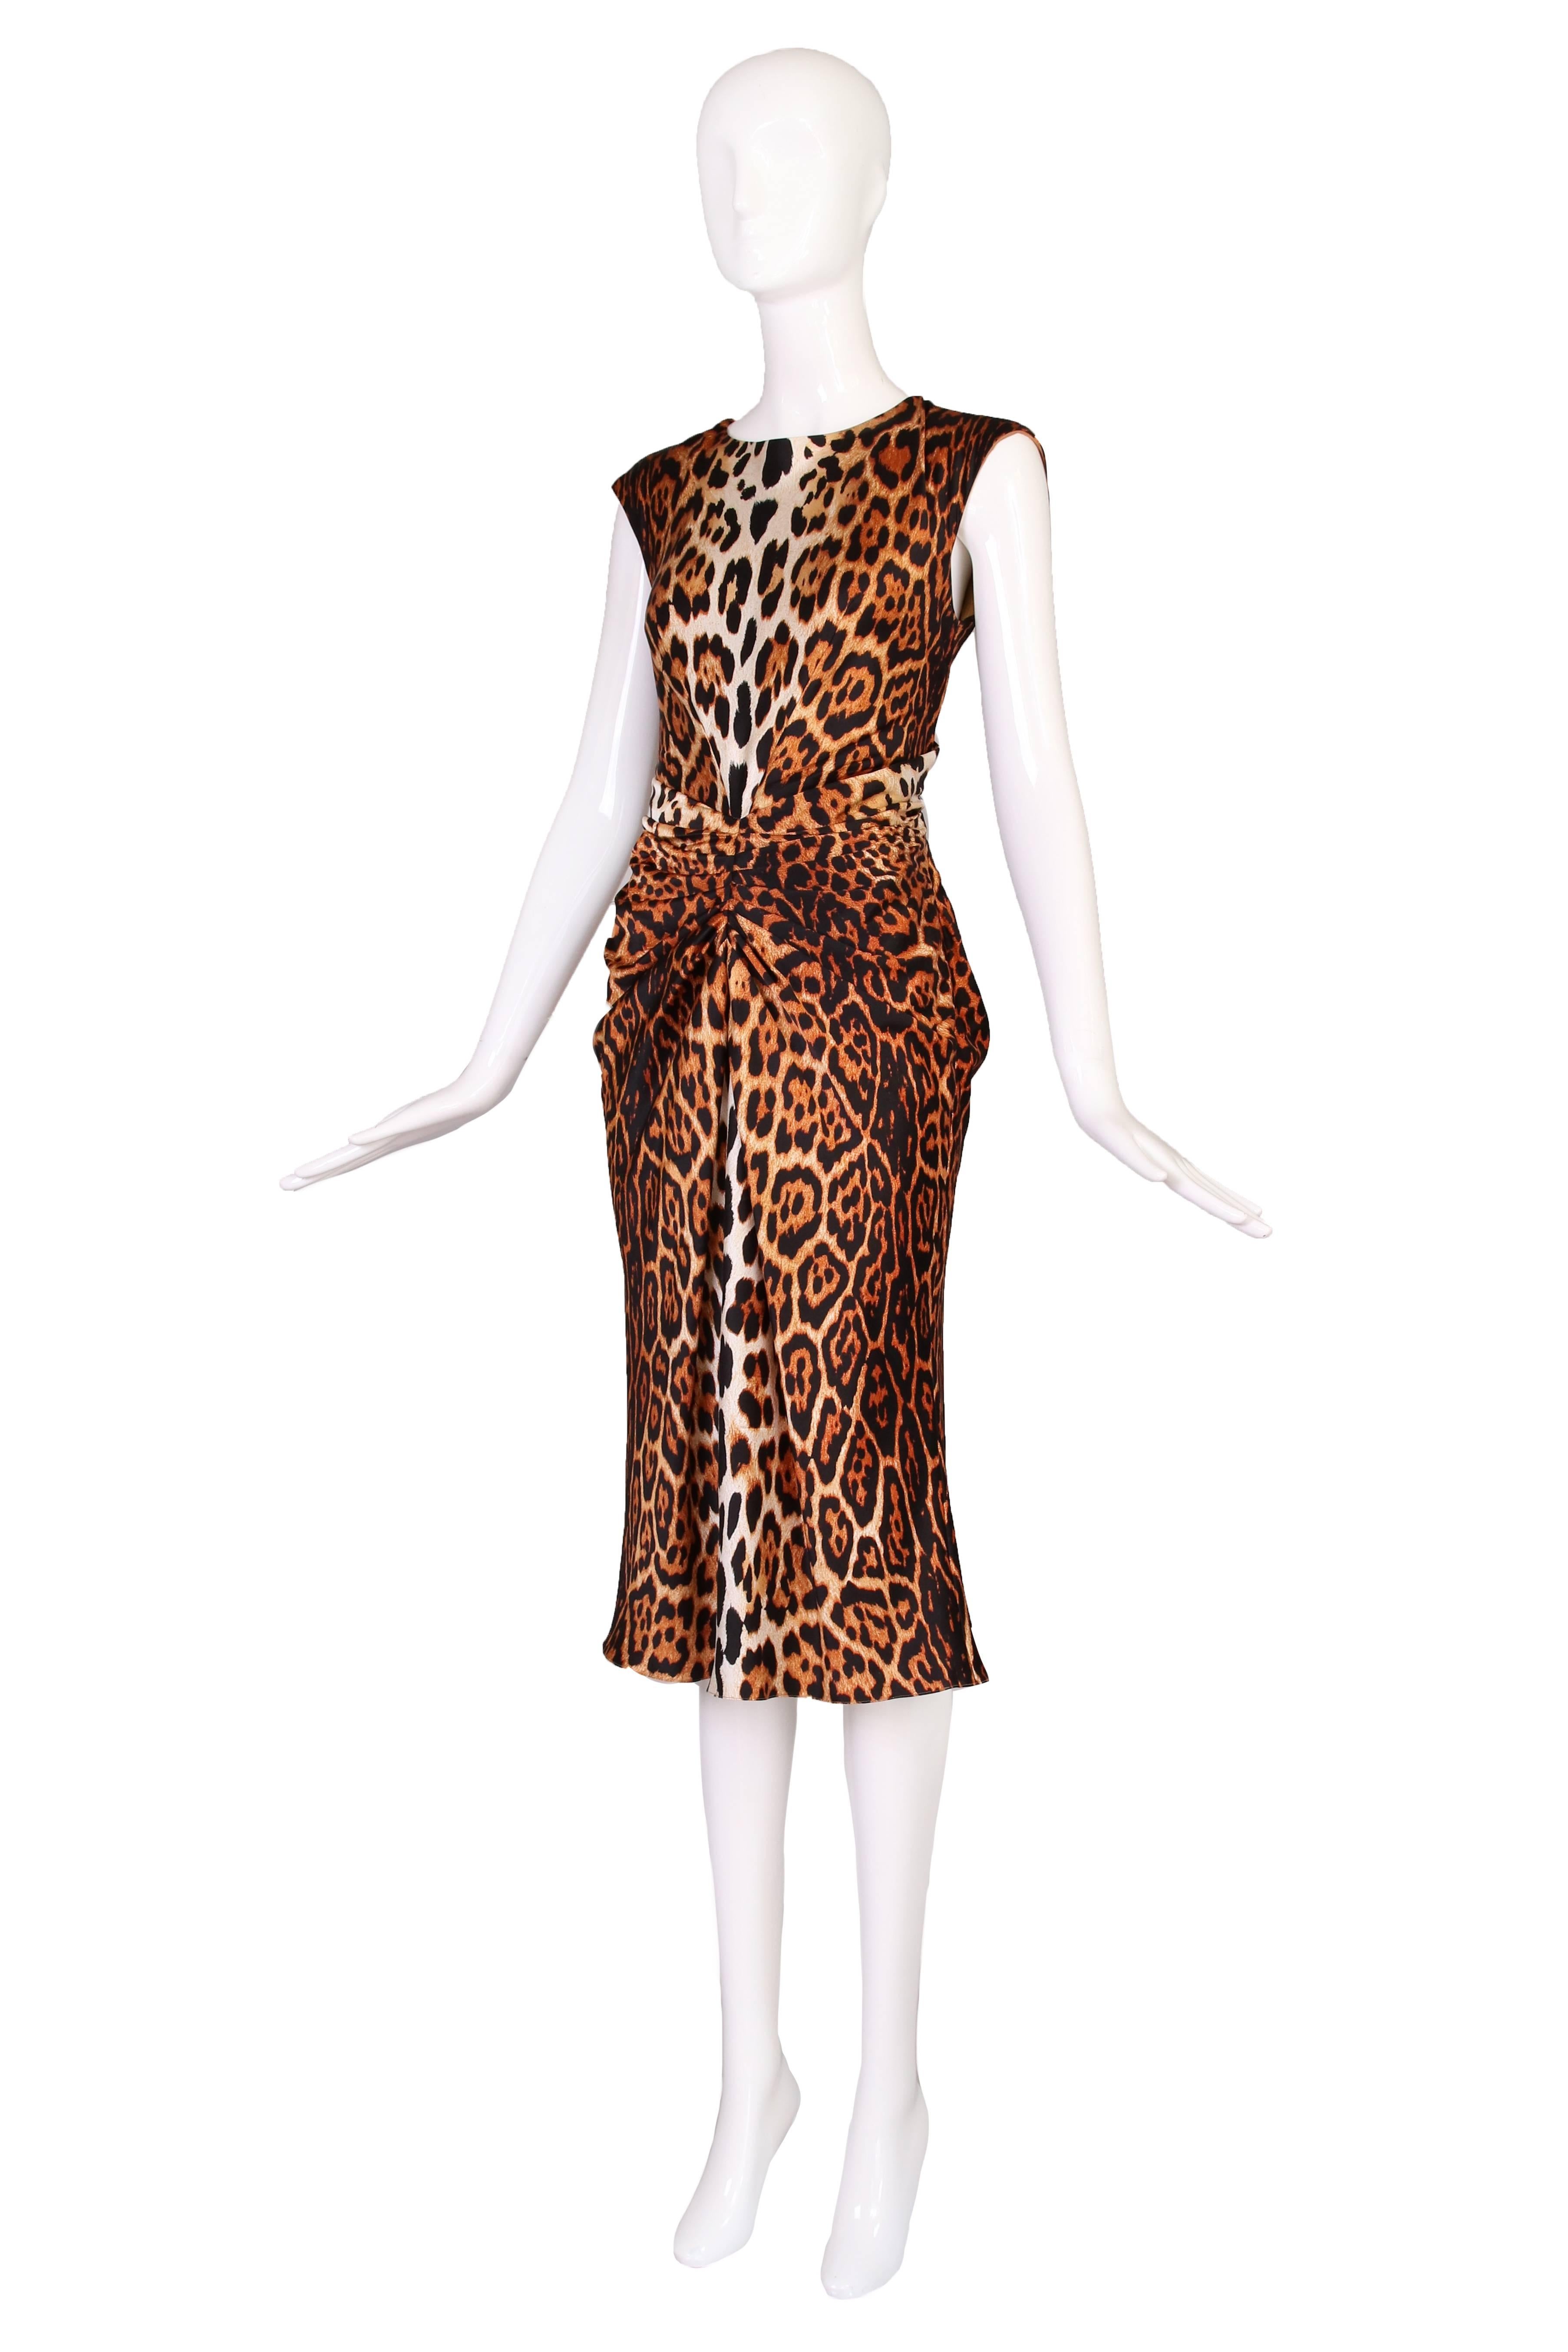 2008 A/H John Galliano era Christian Dior silk leopard print sleeveless dress with diagonal ruching at the waist. Size 8.
MEASUREMENTS:
Bust - 40